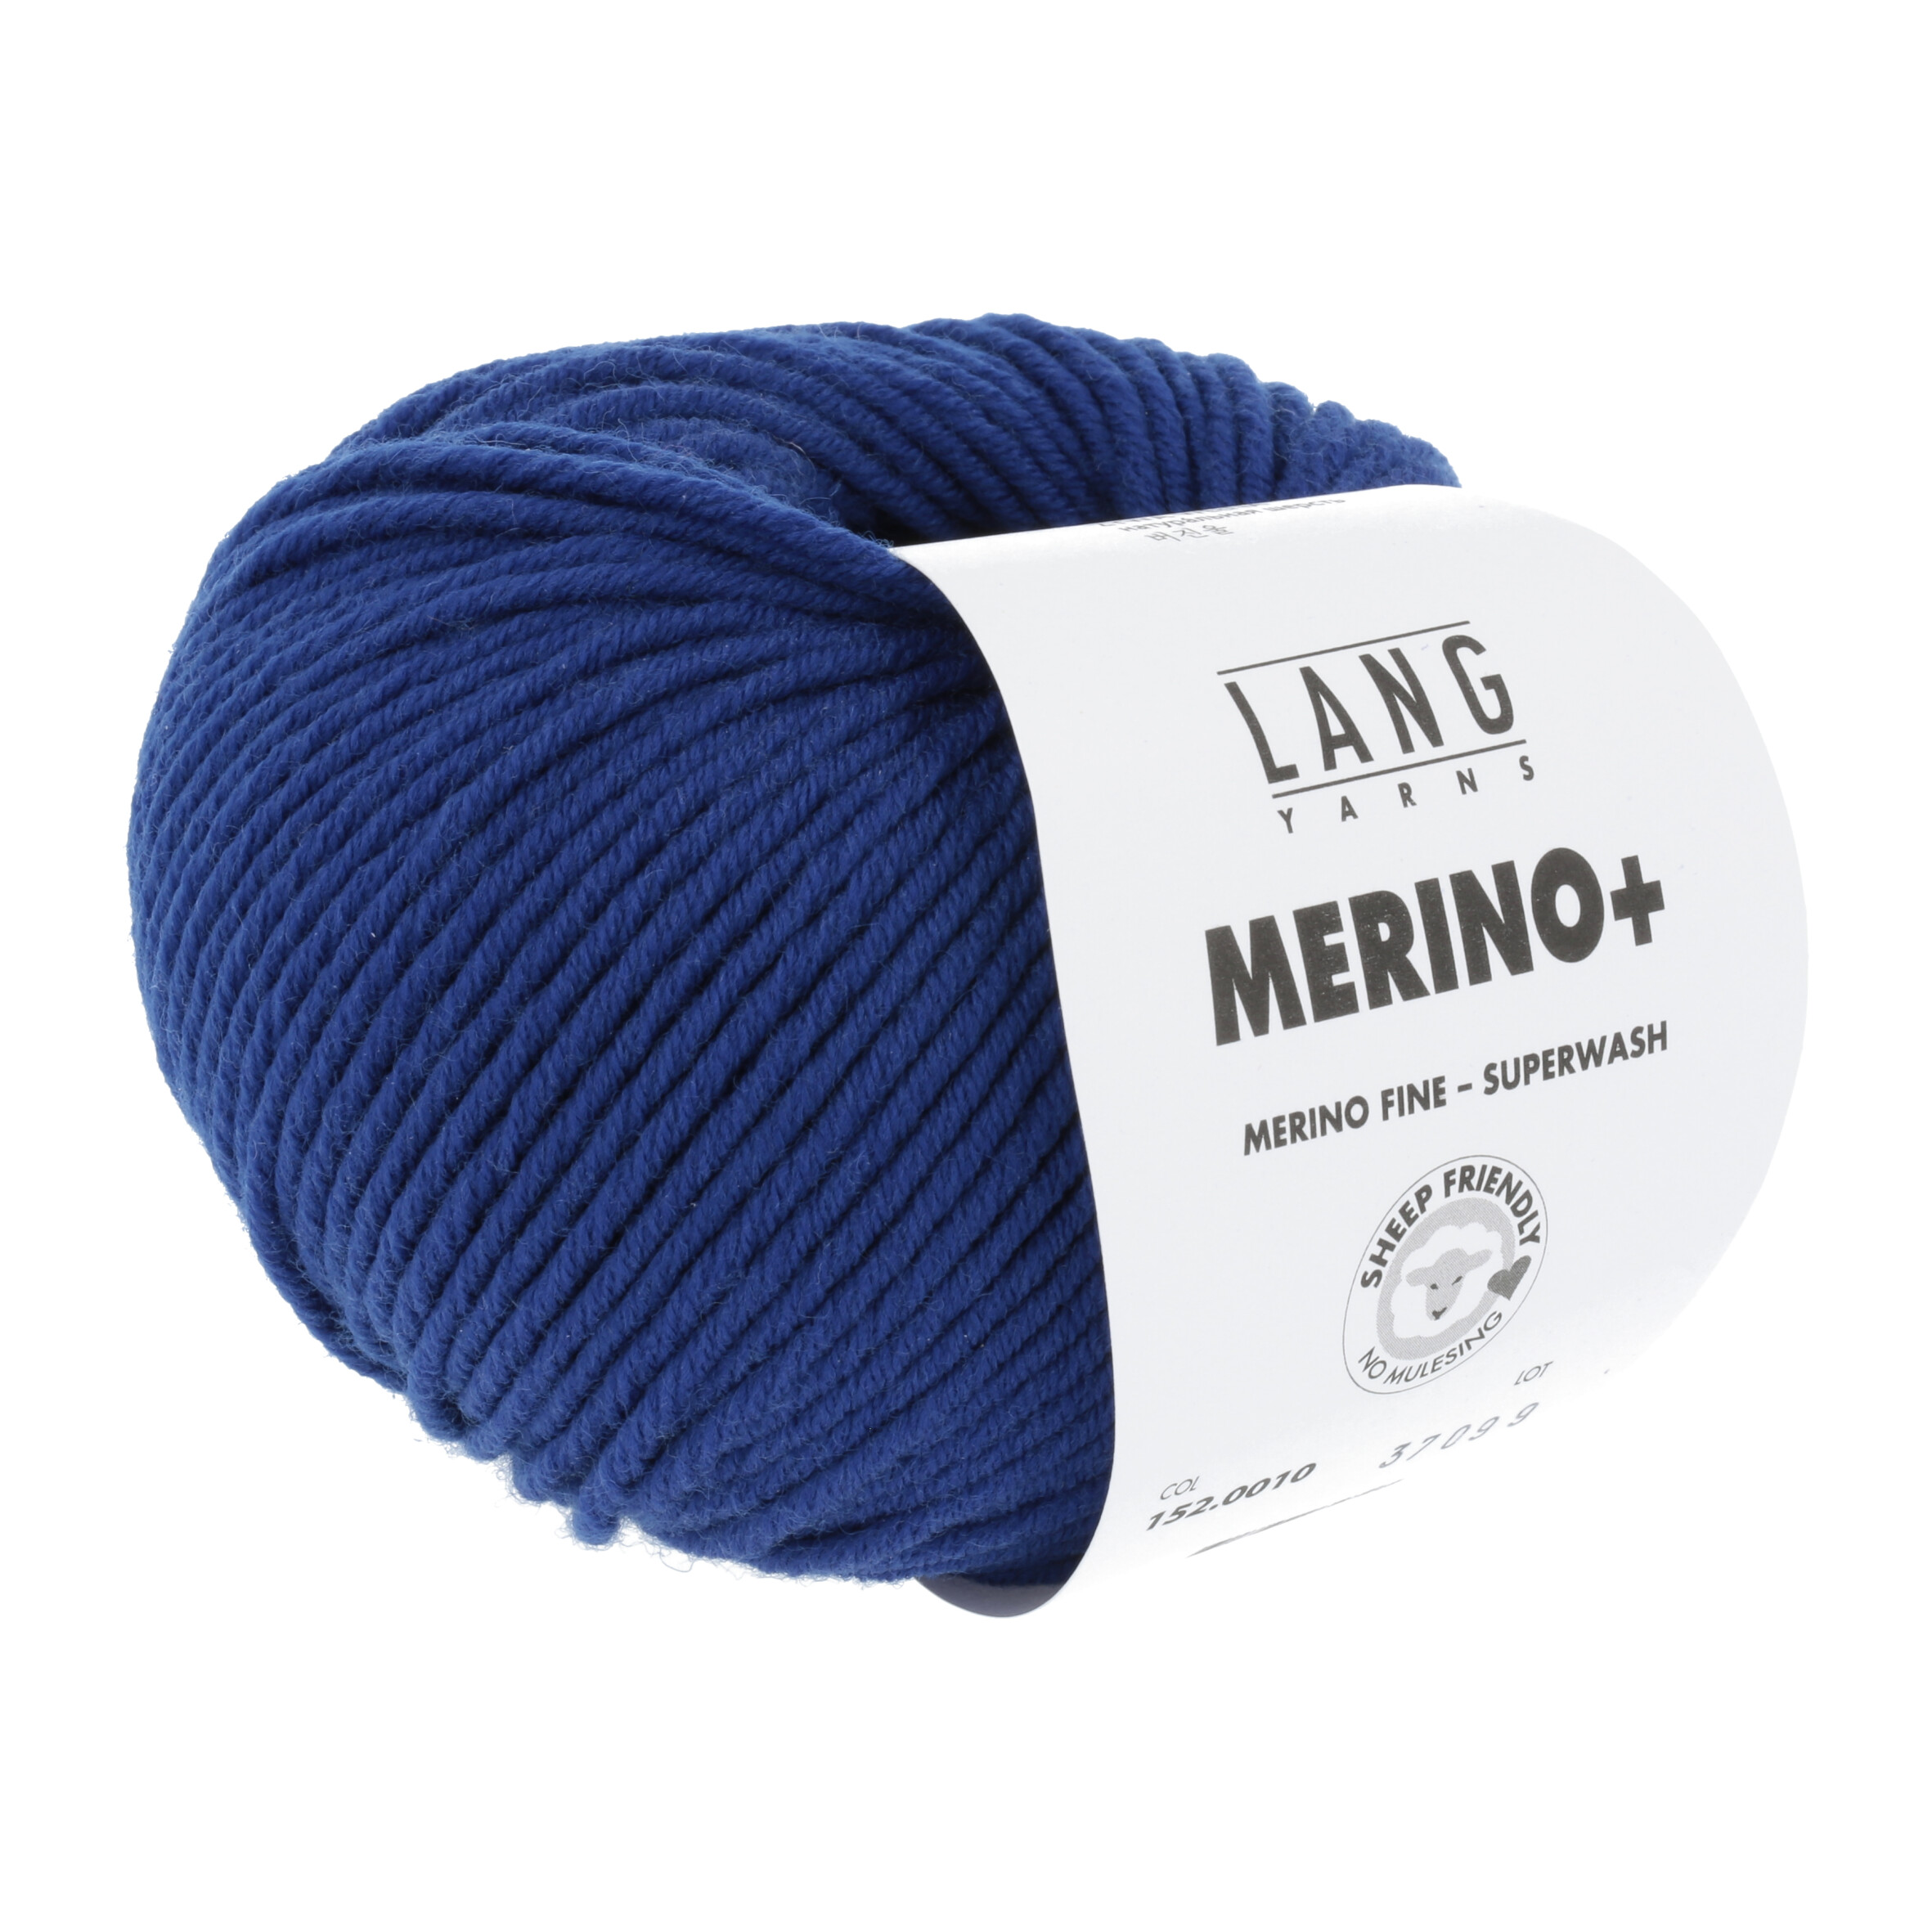 LANG MERINO + 50GR 0010 BLU REALE